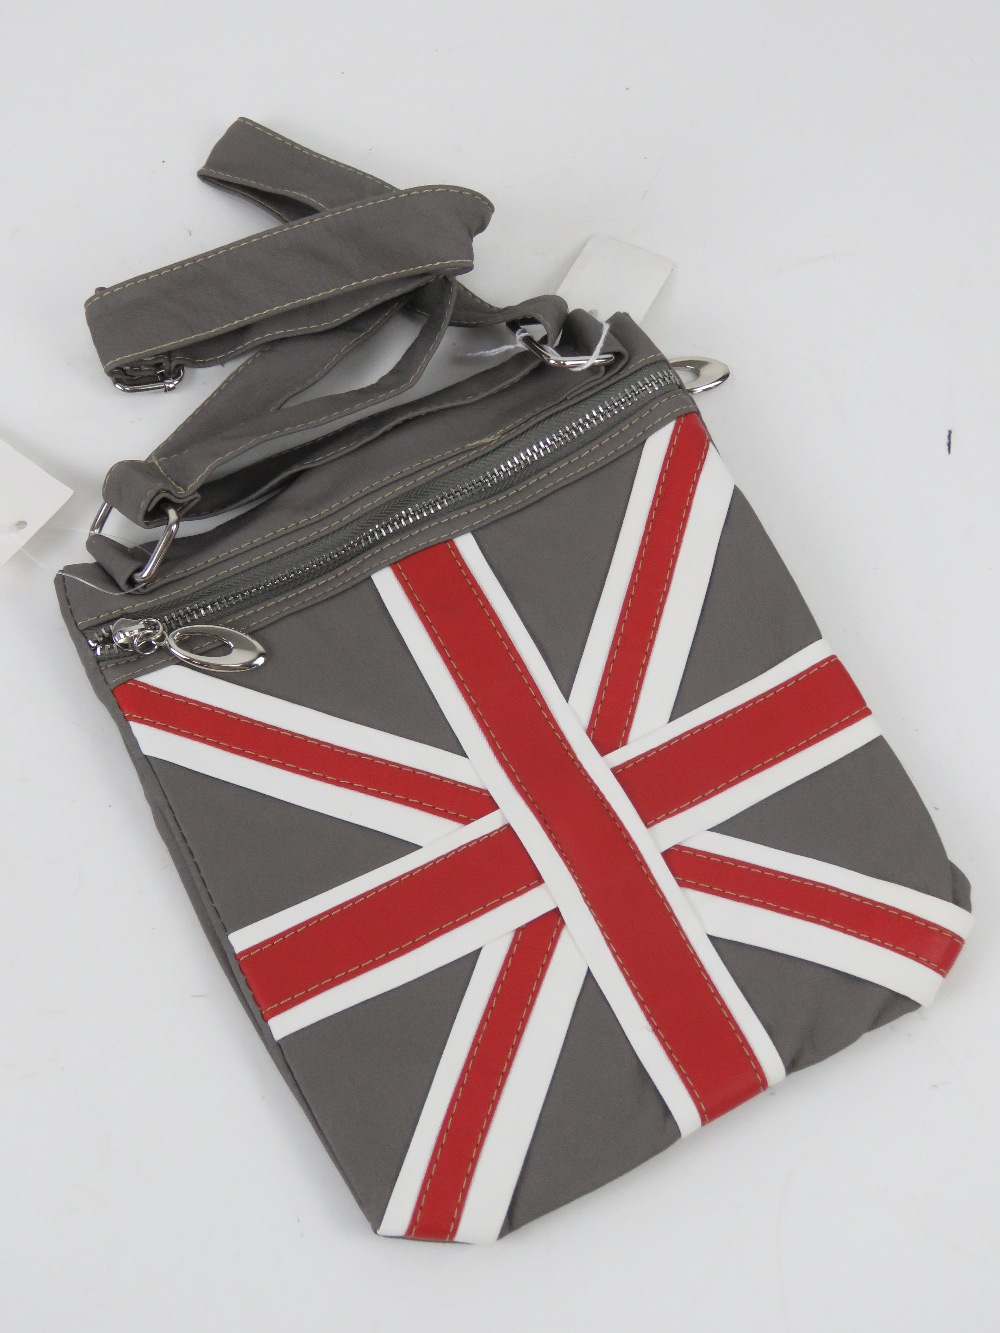 A Union Jack pattern cross body bag 'as new' in grey 21 x 25cm.